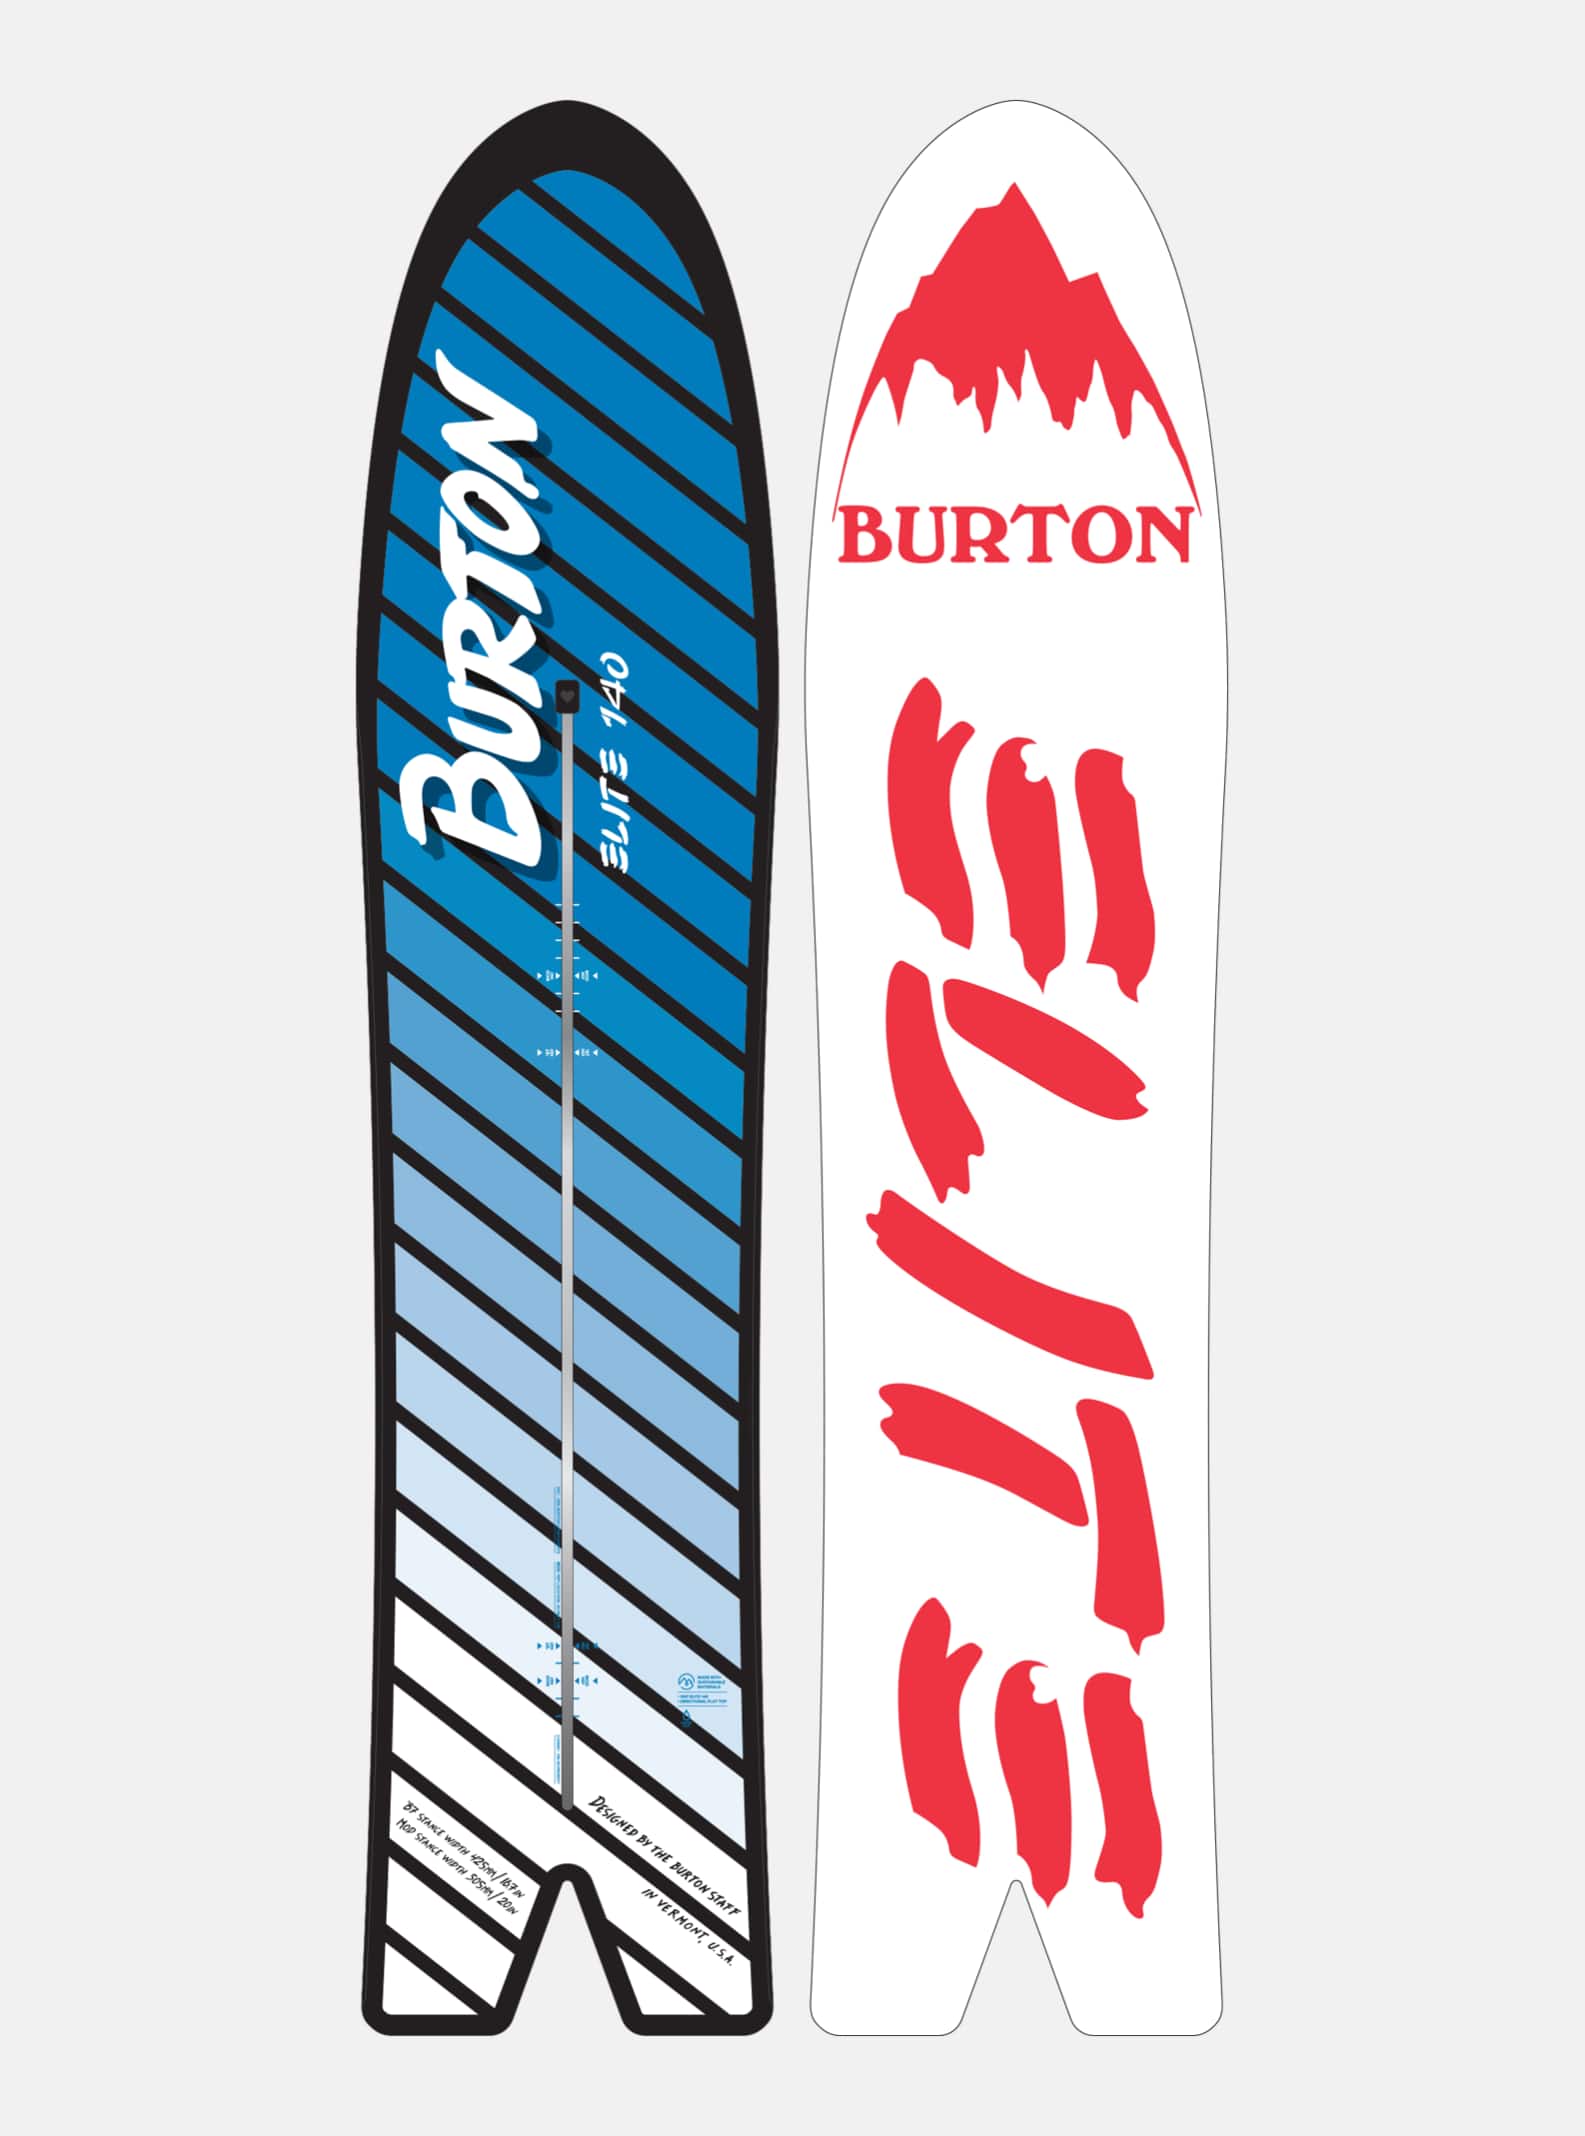 Men's Snowboards | Burton Snowboards US